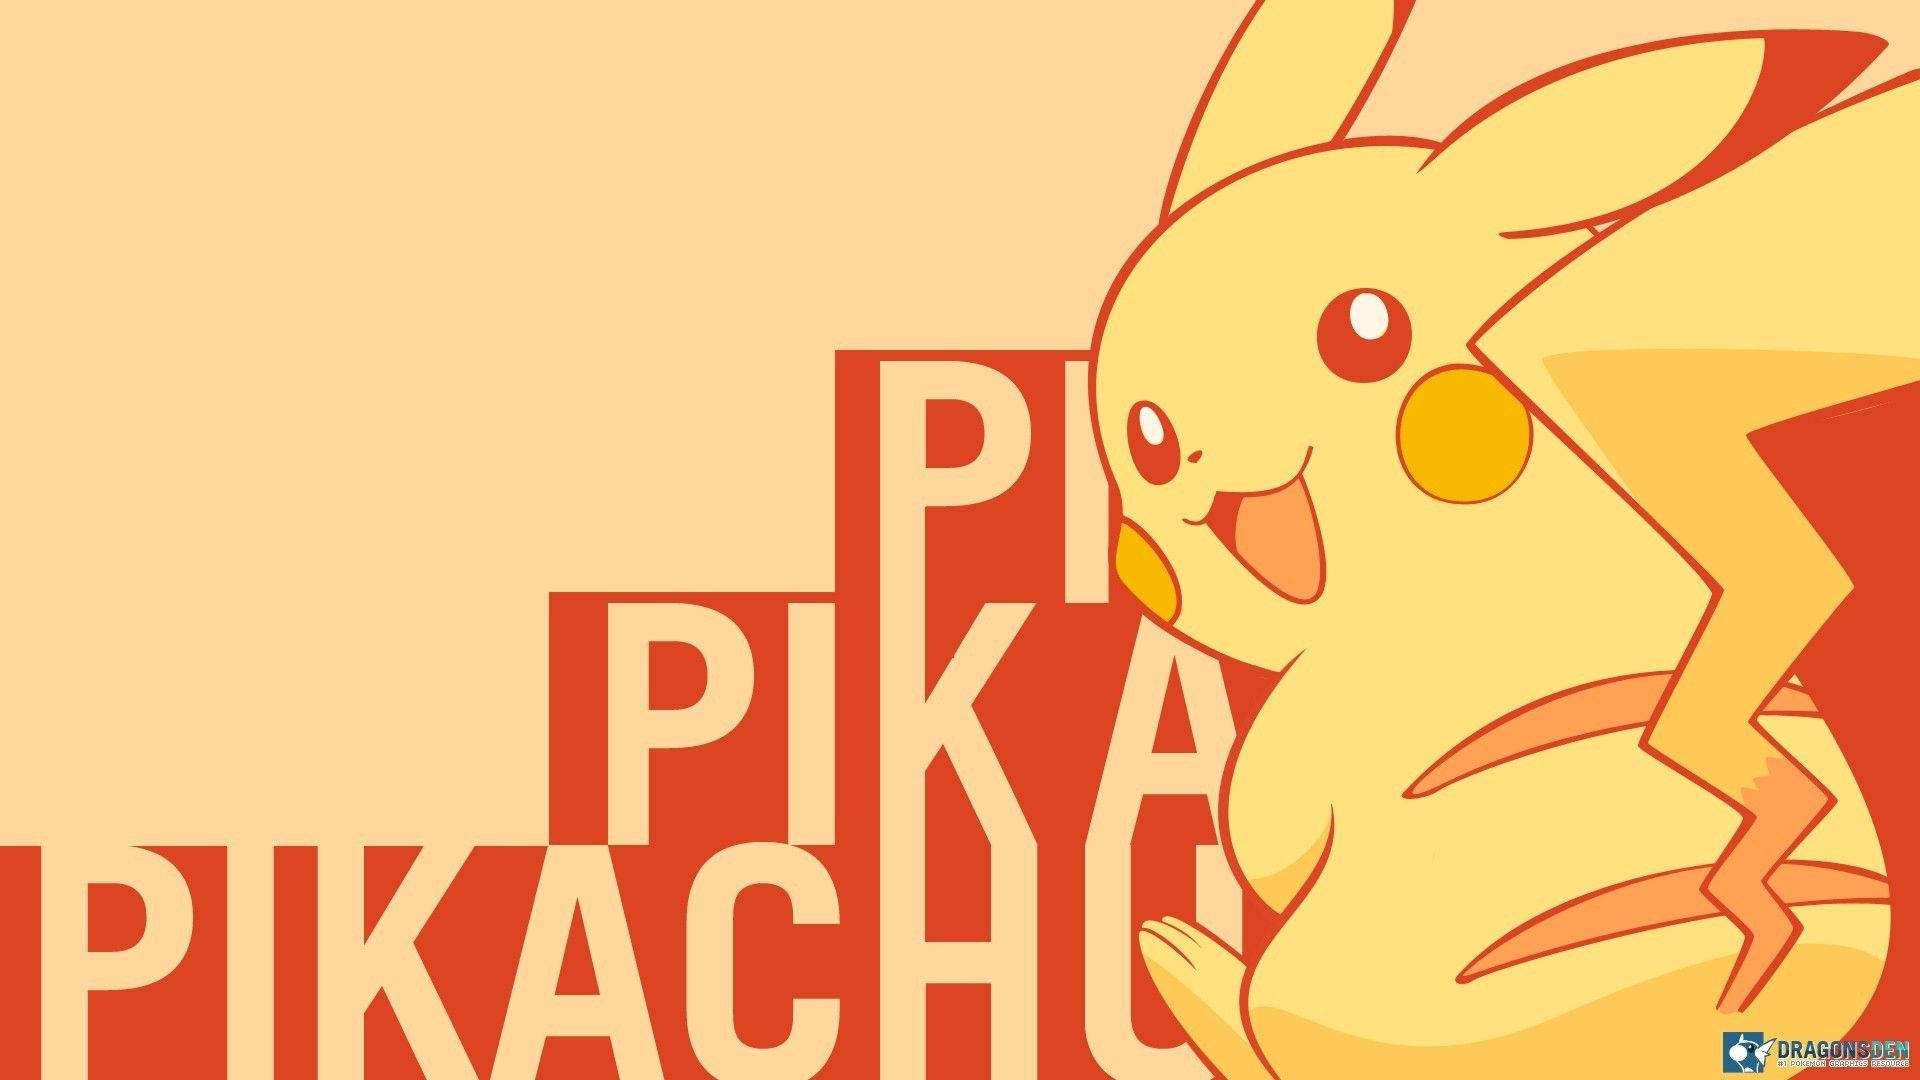 Join Pikachu on a fun-filled adventure! Wallpaper